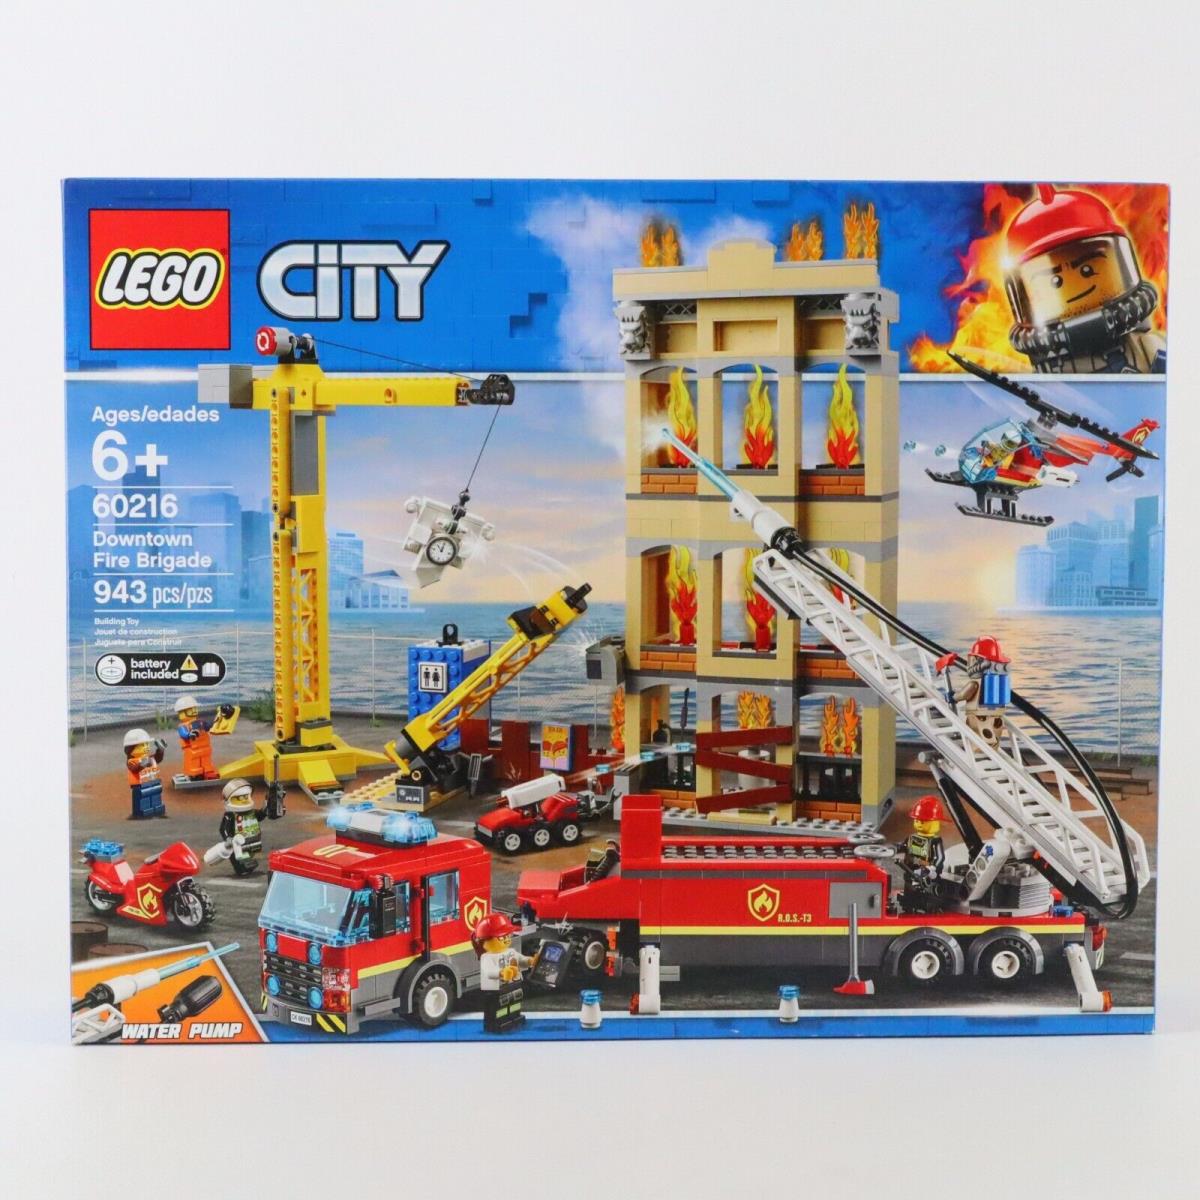 Lego City 60216 Downtown Fire Brigade 943pcs 6+ Item 6251474 Water Pump